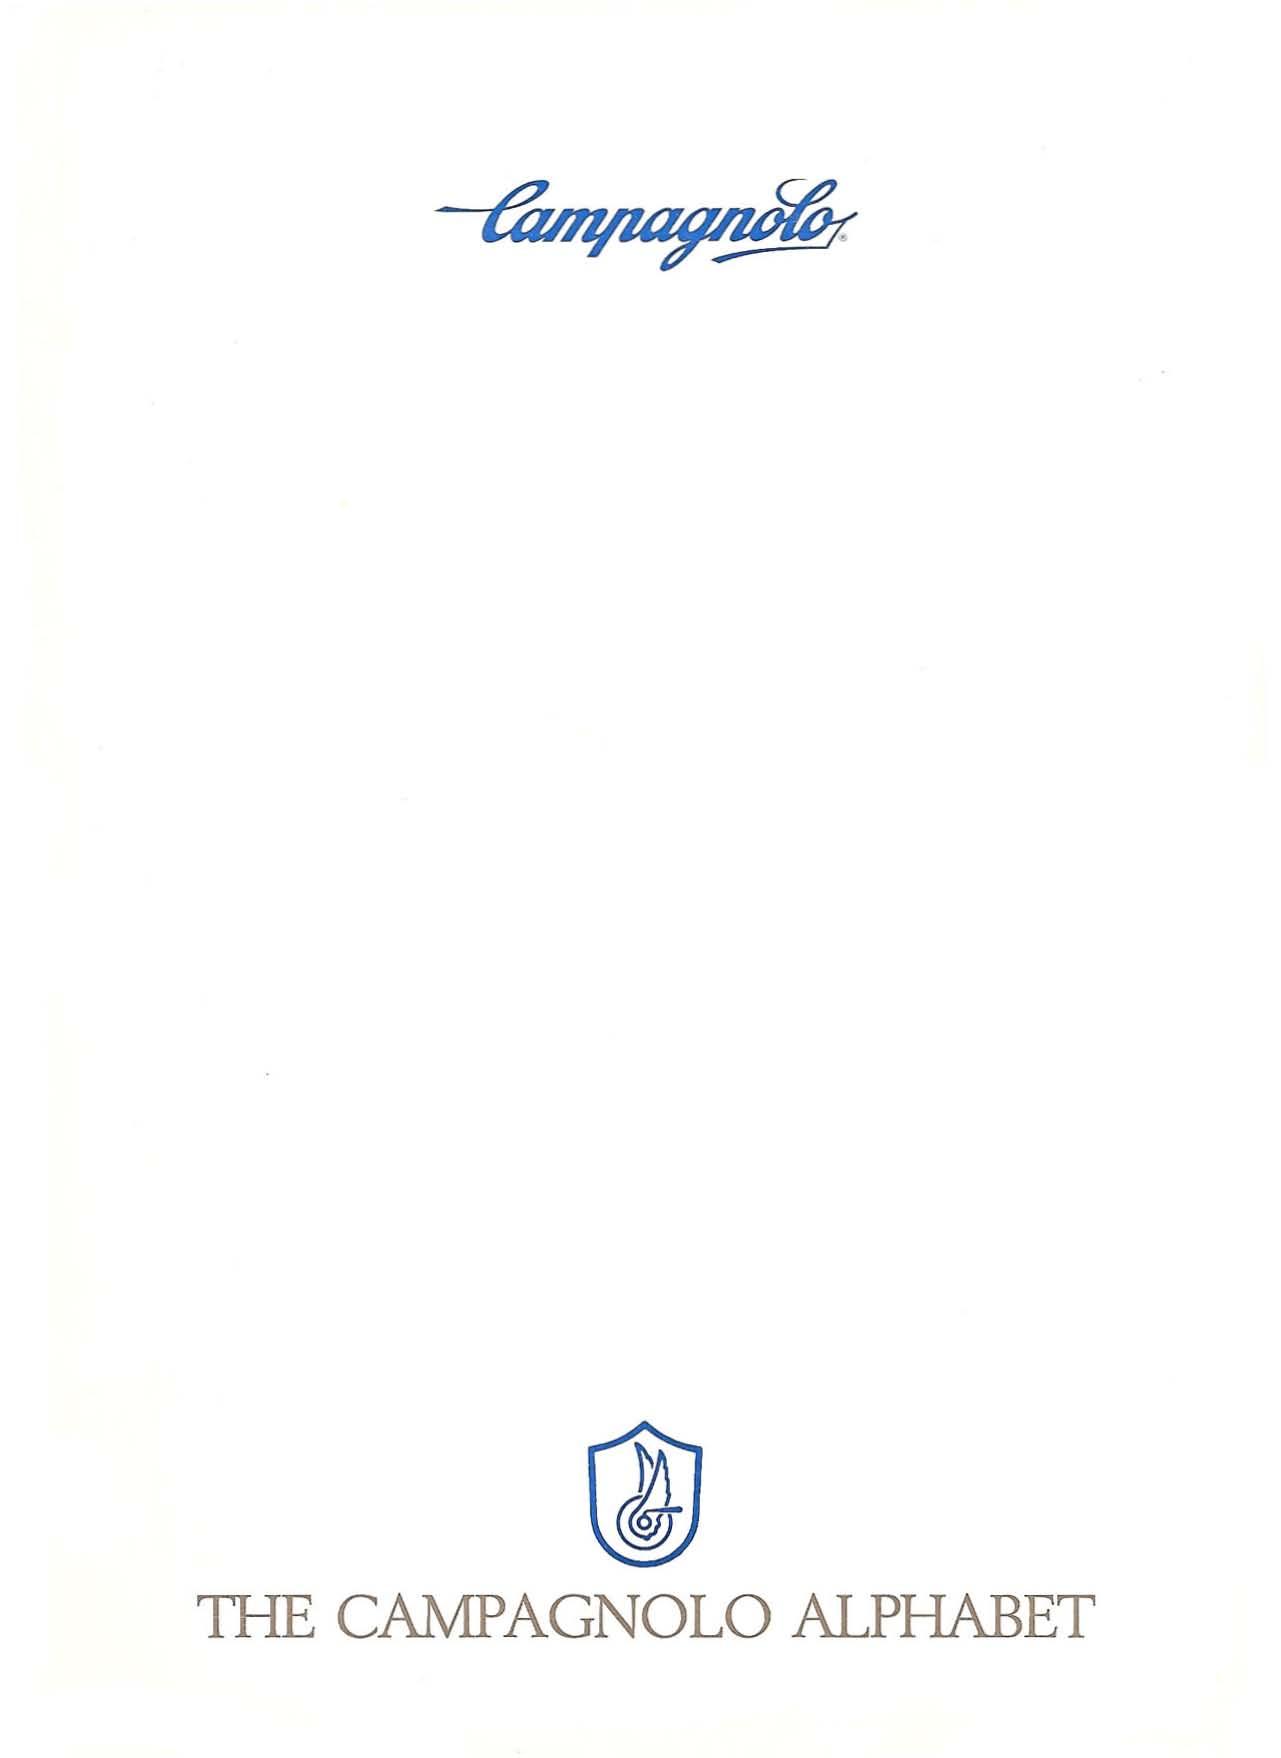 1986 Campagnolo Alphabet Catalog